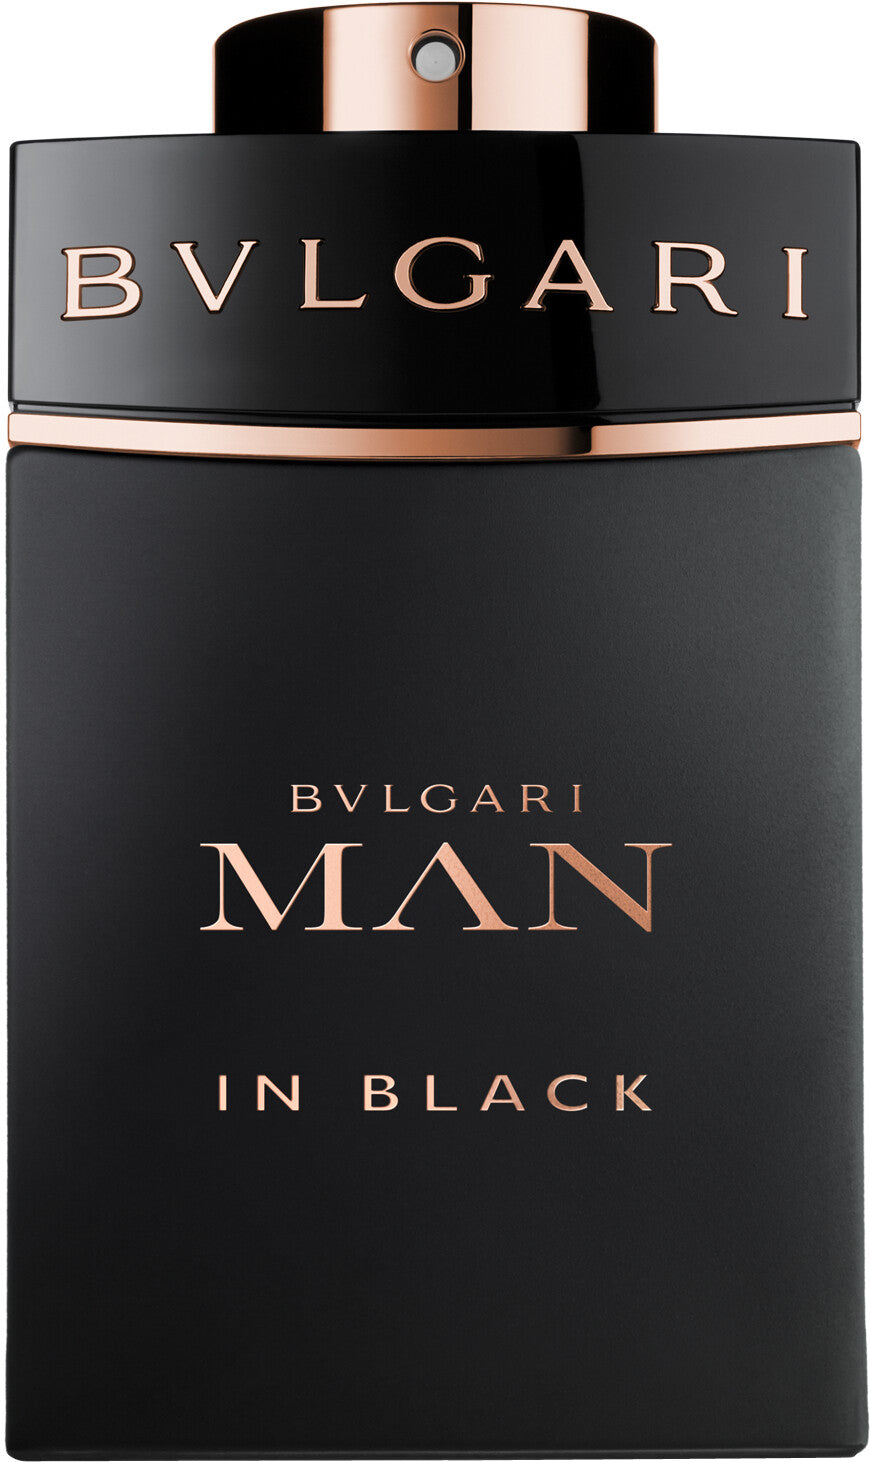 Bvlgari Man in black EDP 100ml